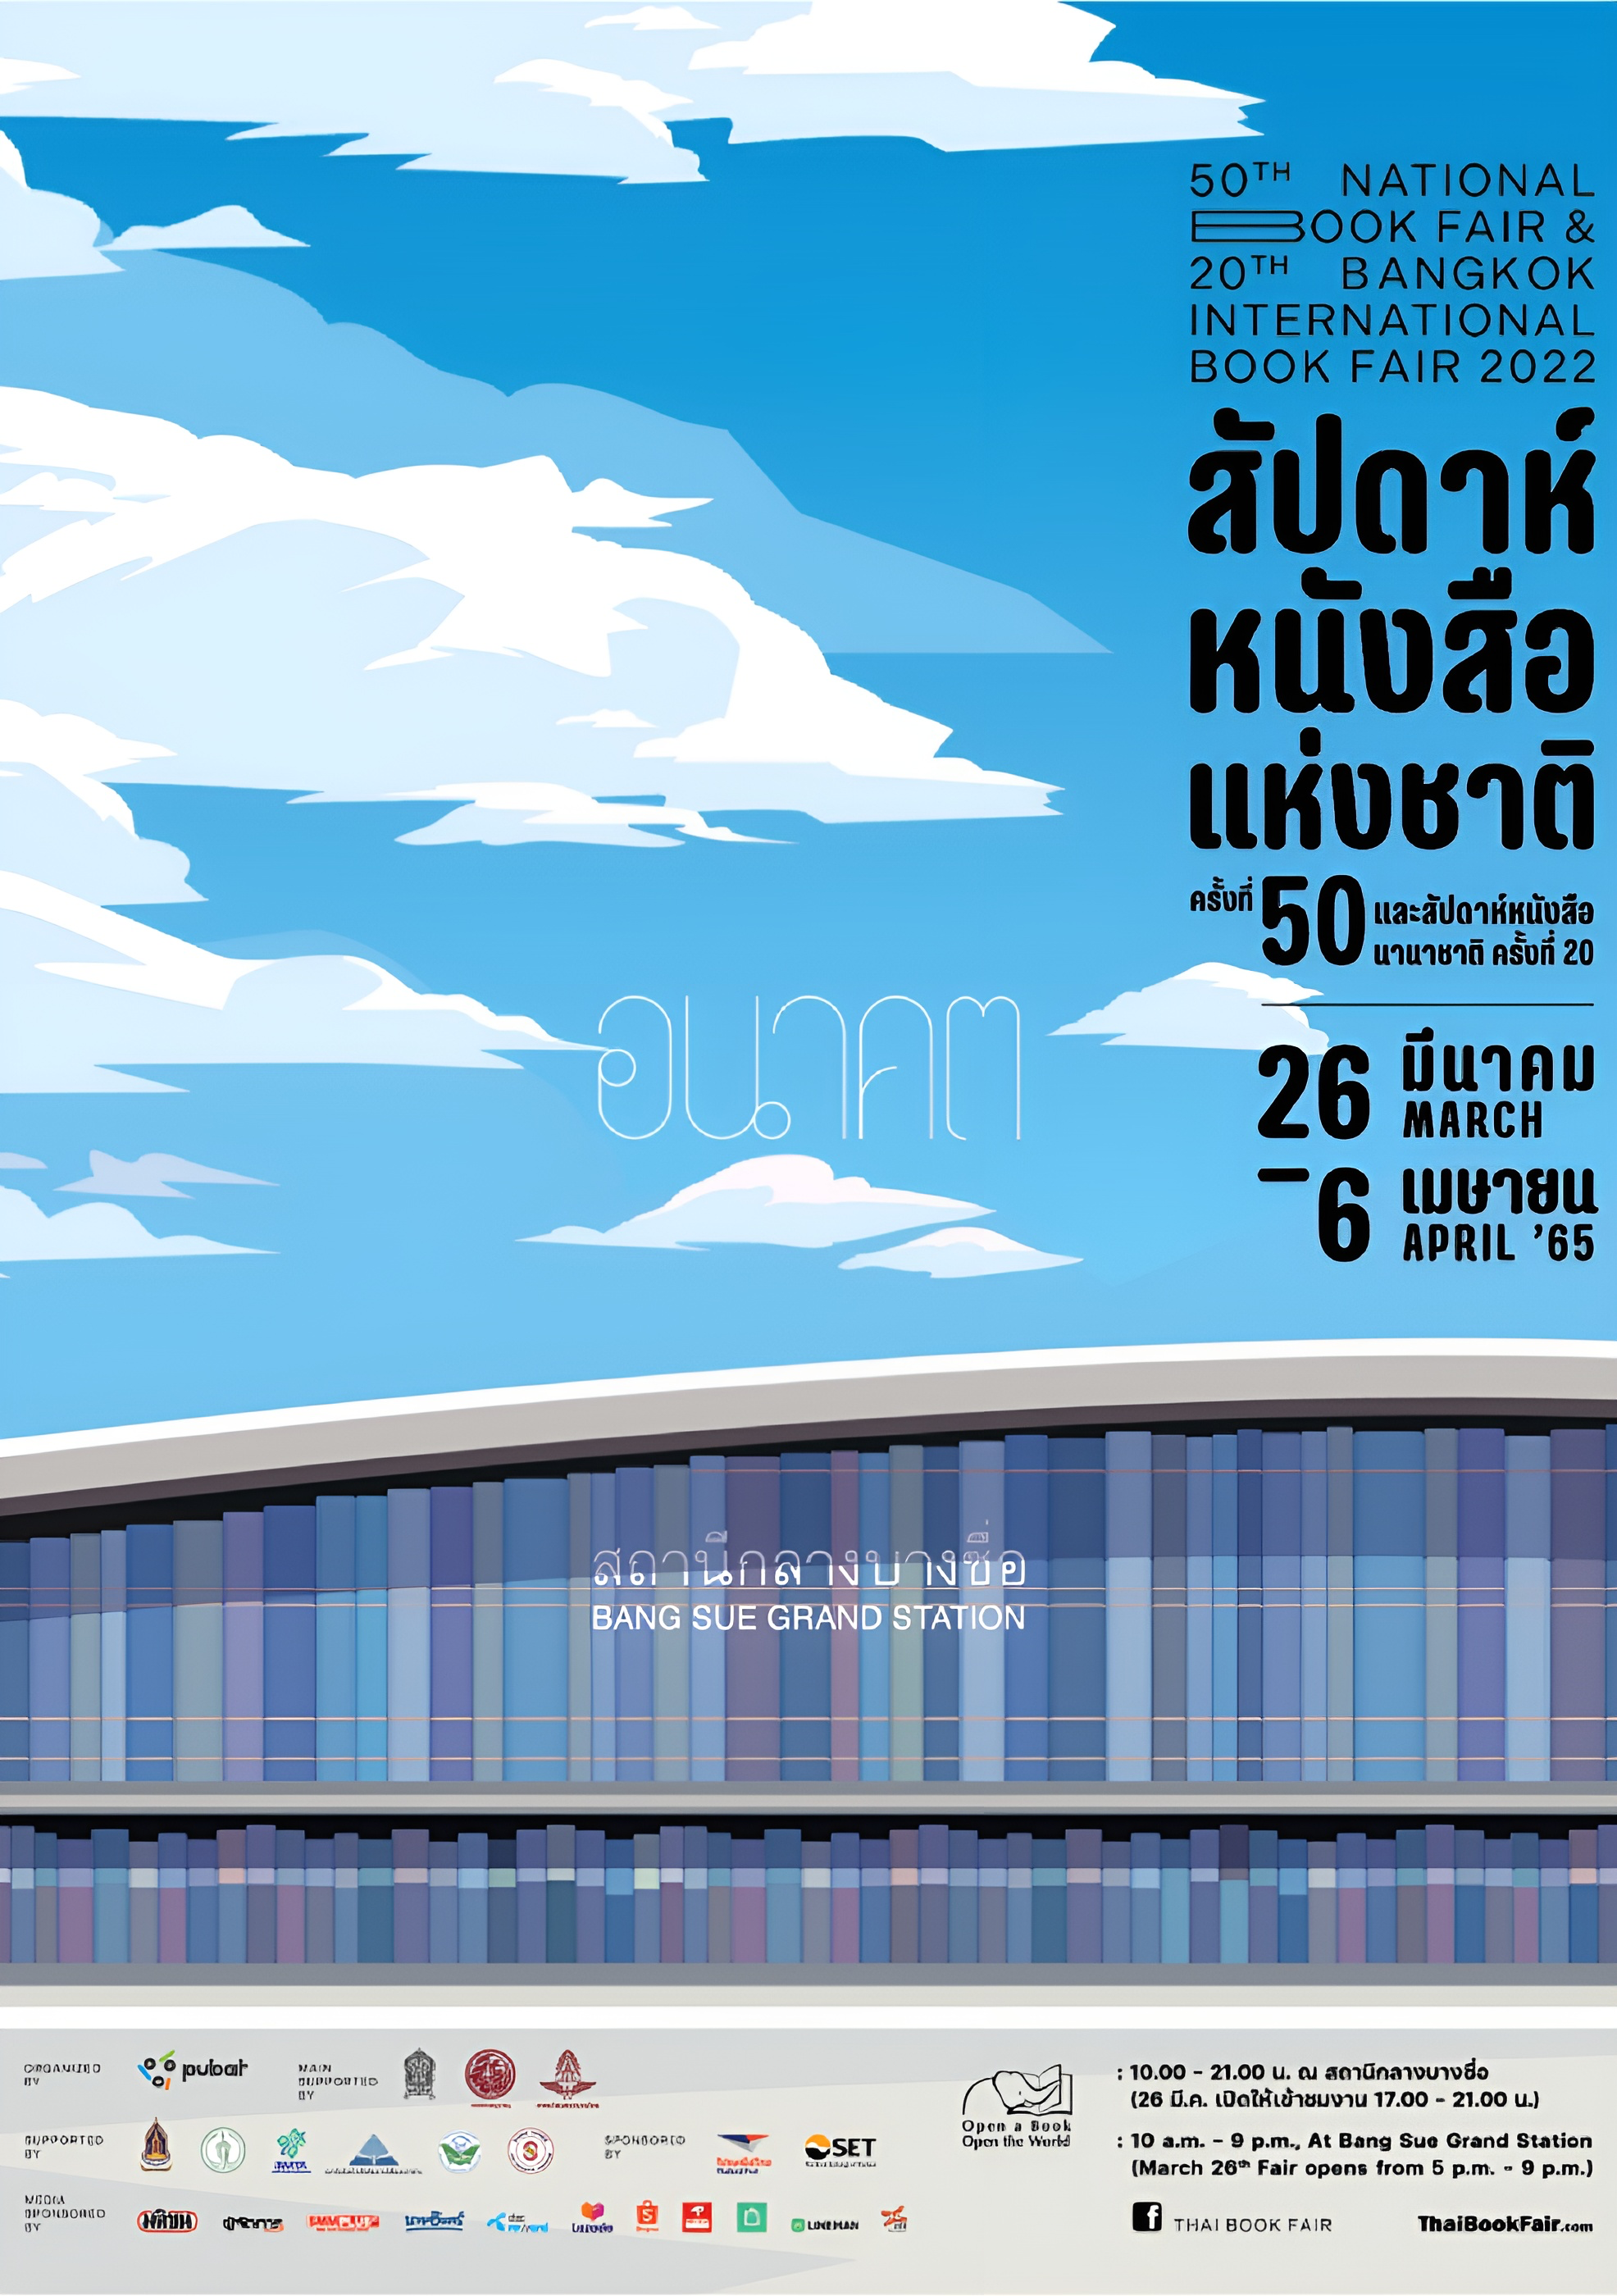 National Book Fair & Bangkok International Book Fair 2022